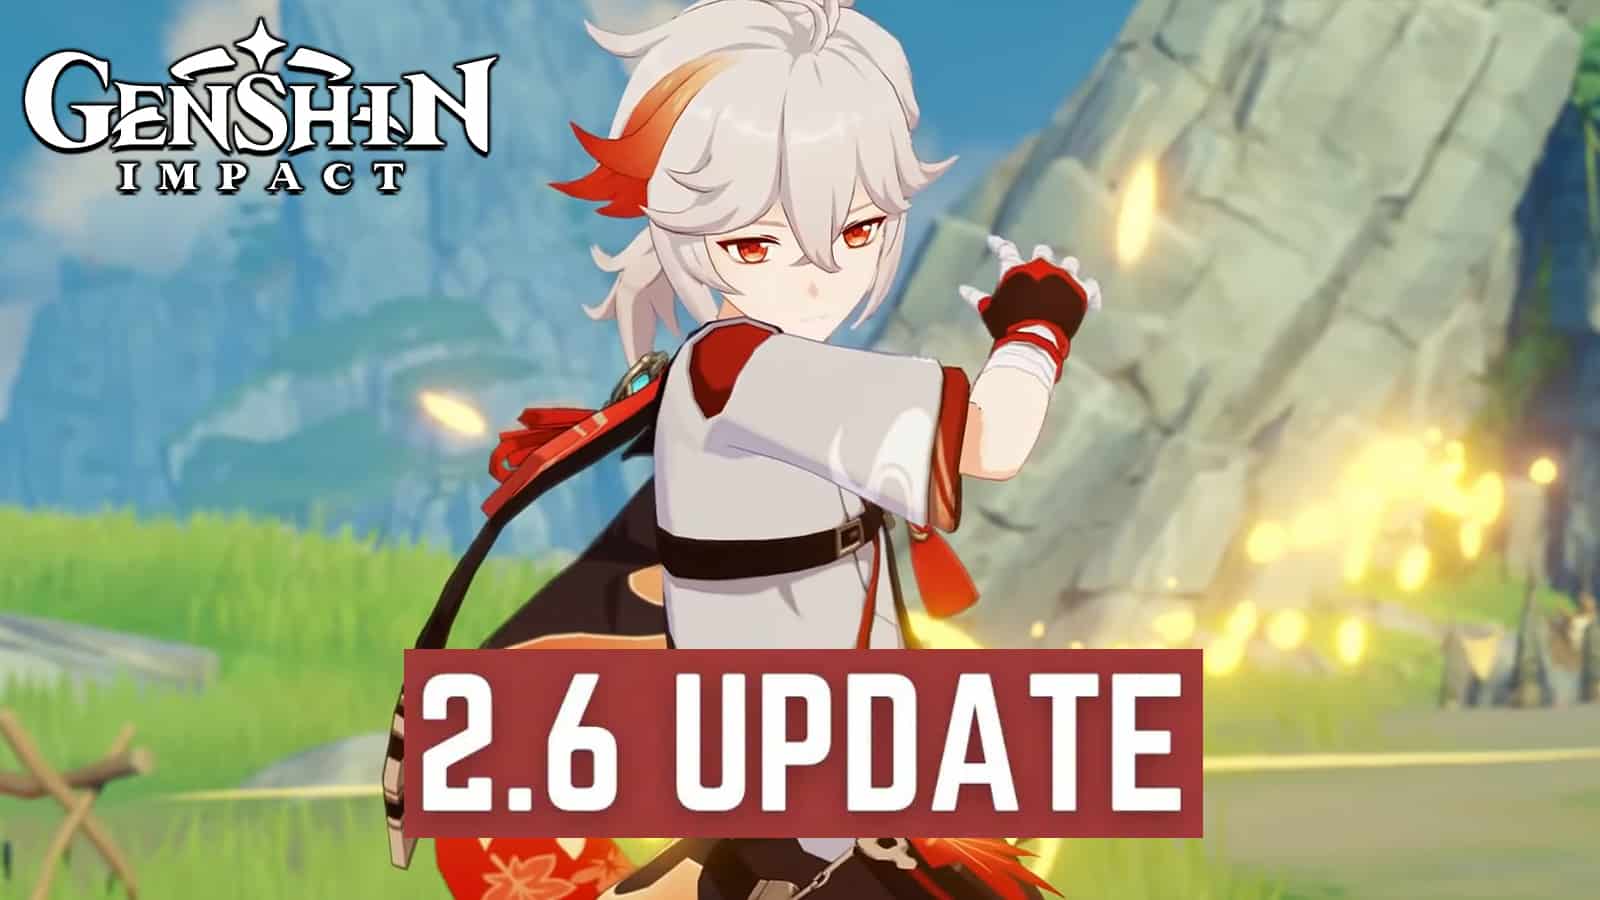 Genshin Impact Kazuha 2.6 update banner screenshot.